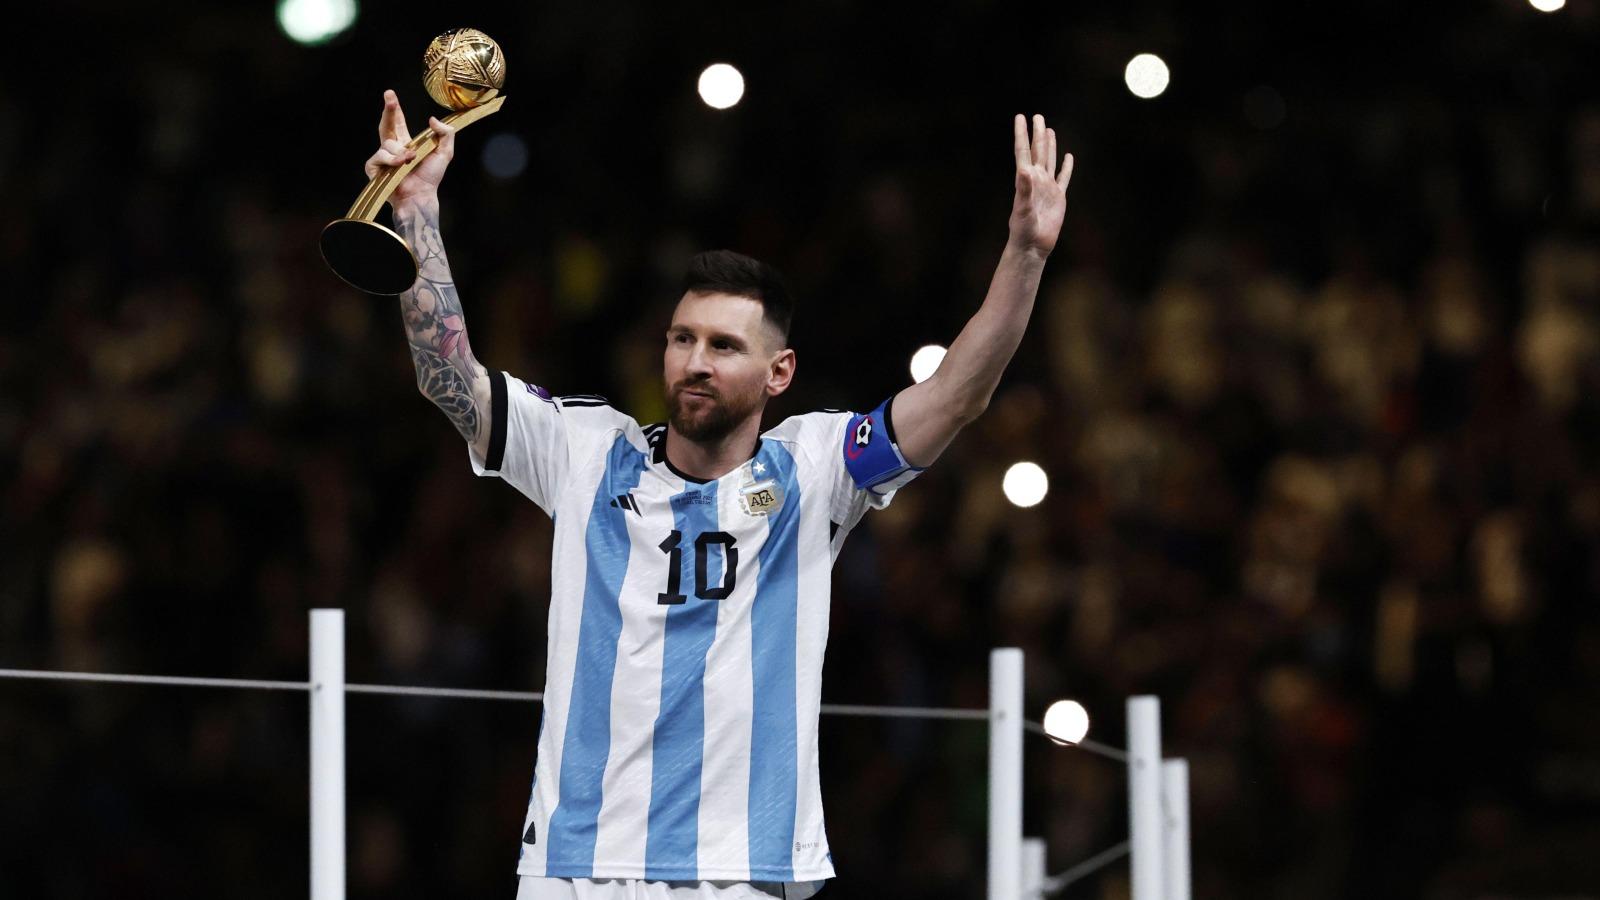 50 Messi World Cup Wallpapers  WallpaperSafari